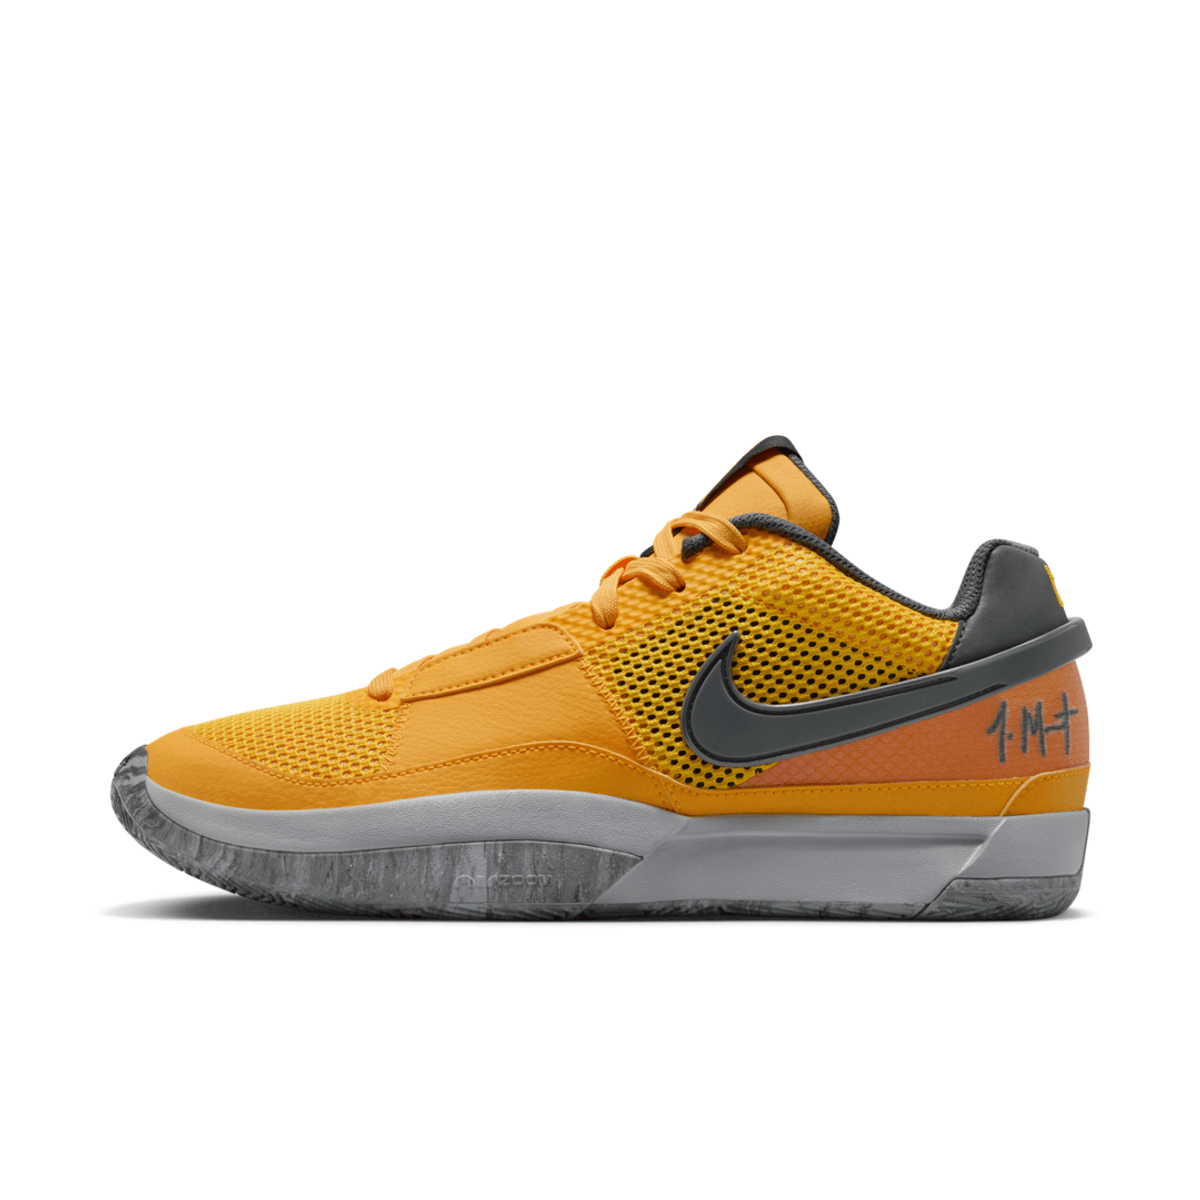 Nike Ja 1 PE Wet Cement Laser Orange